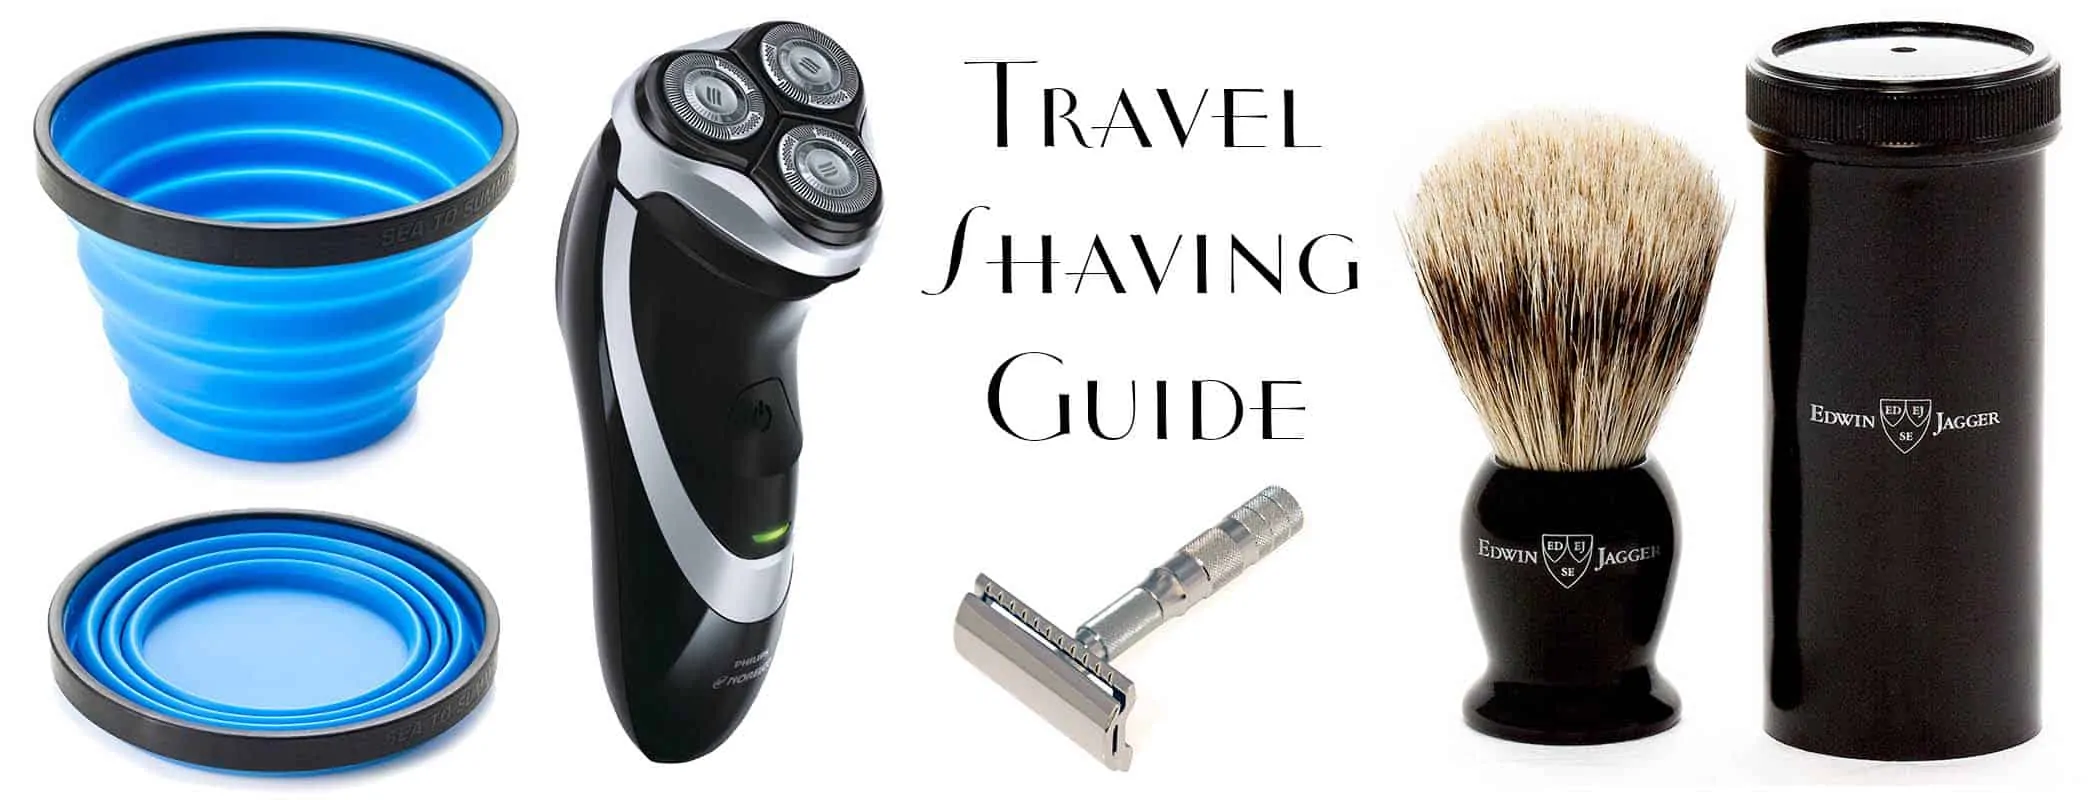 4 Shaving Gift Set: Proraso Travel Kit 